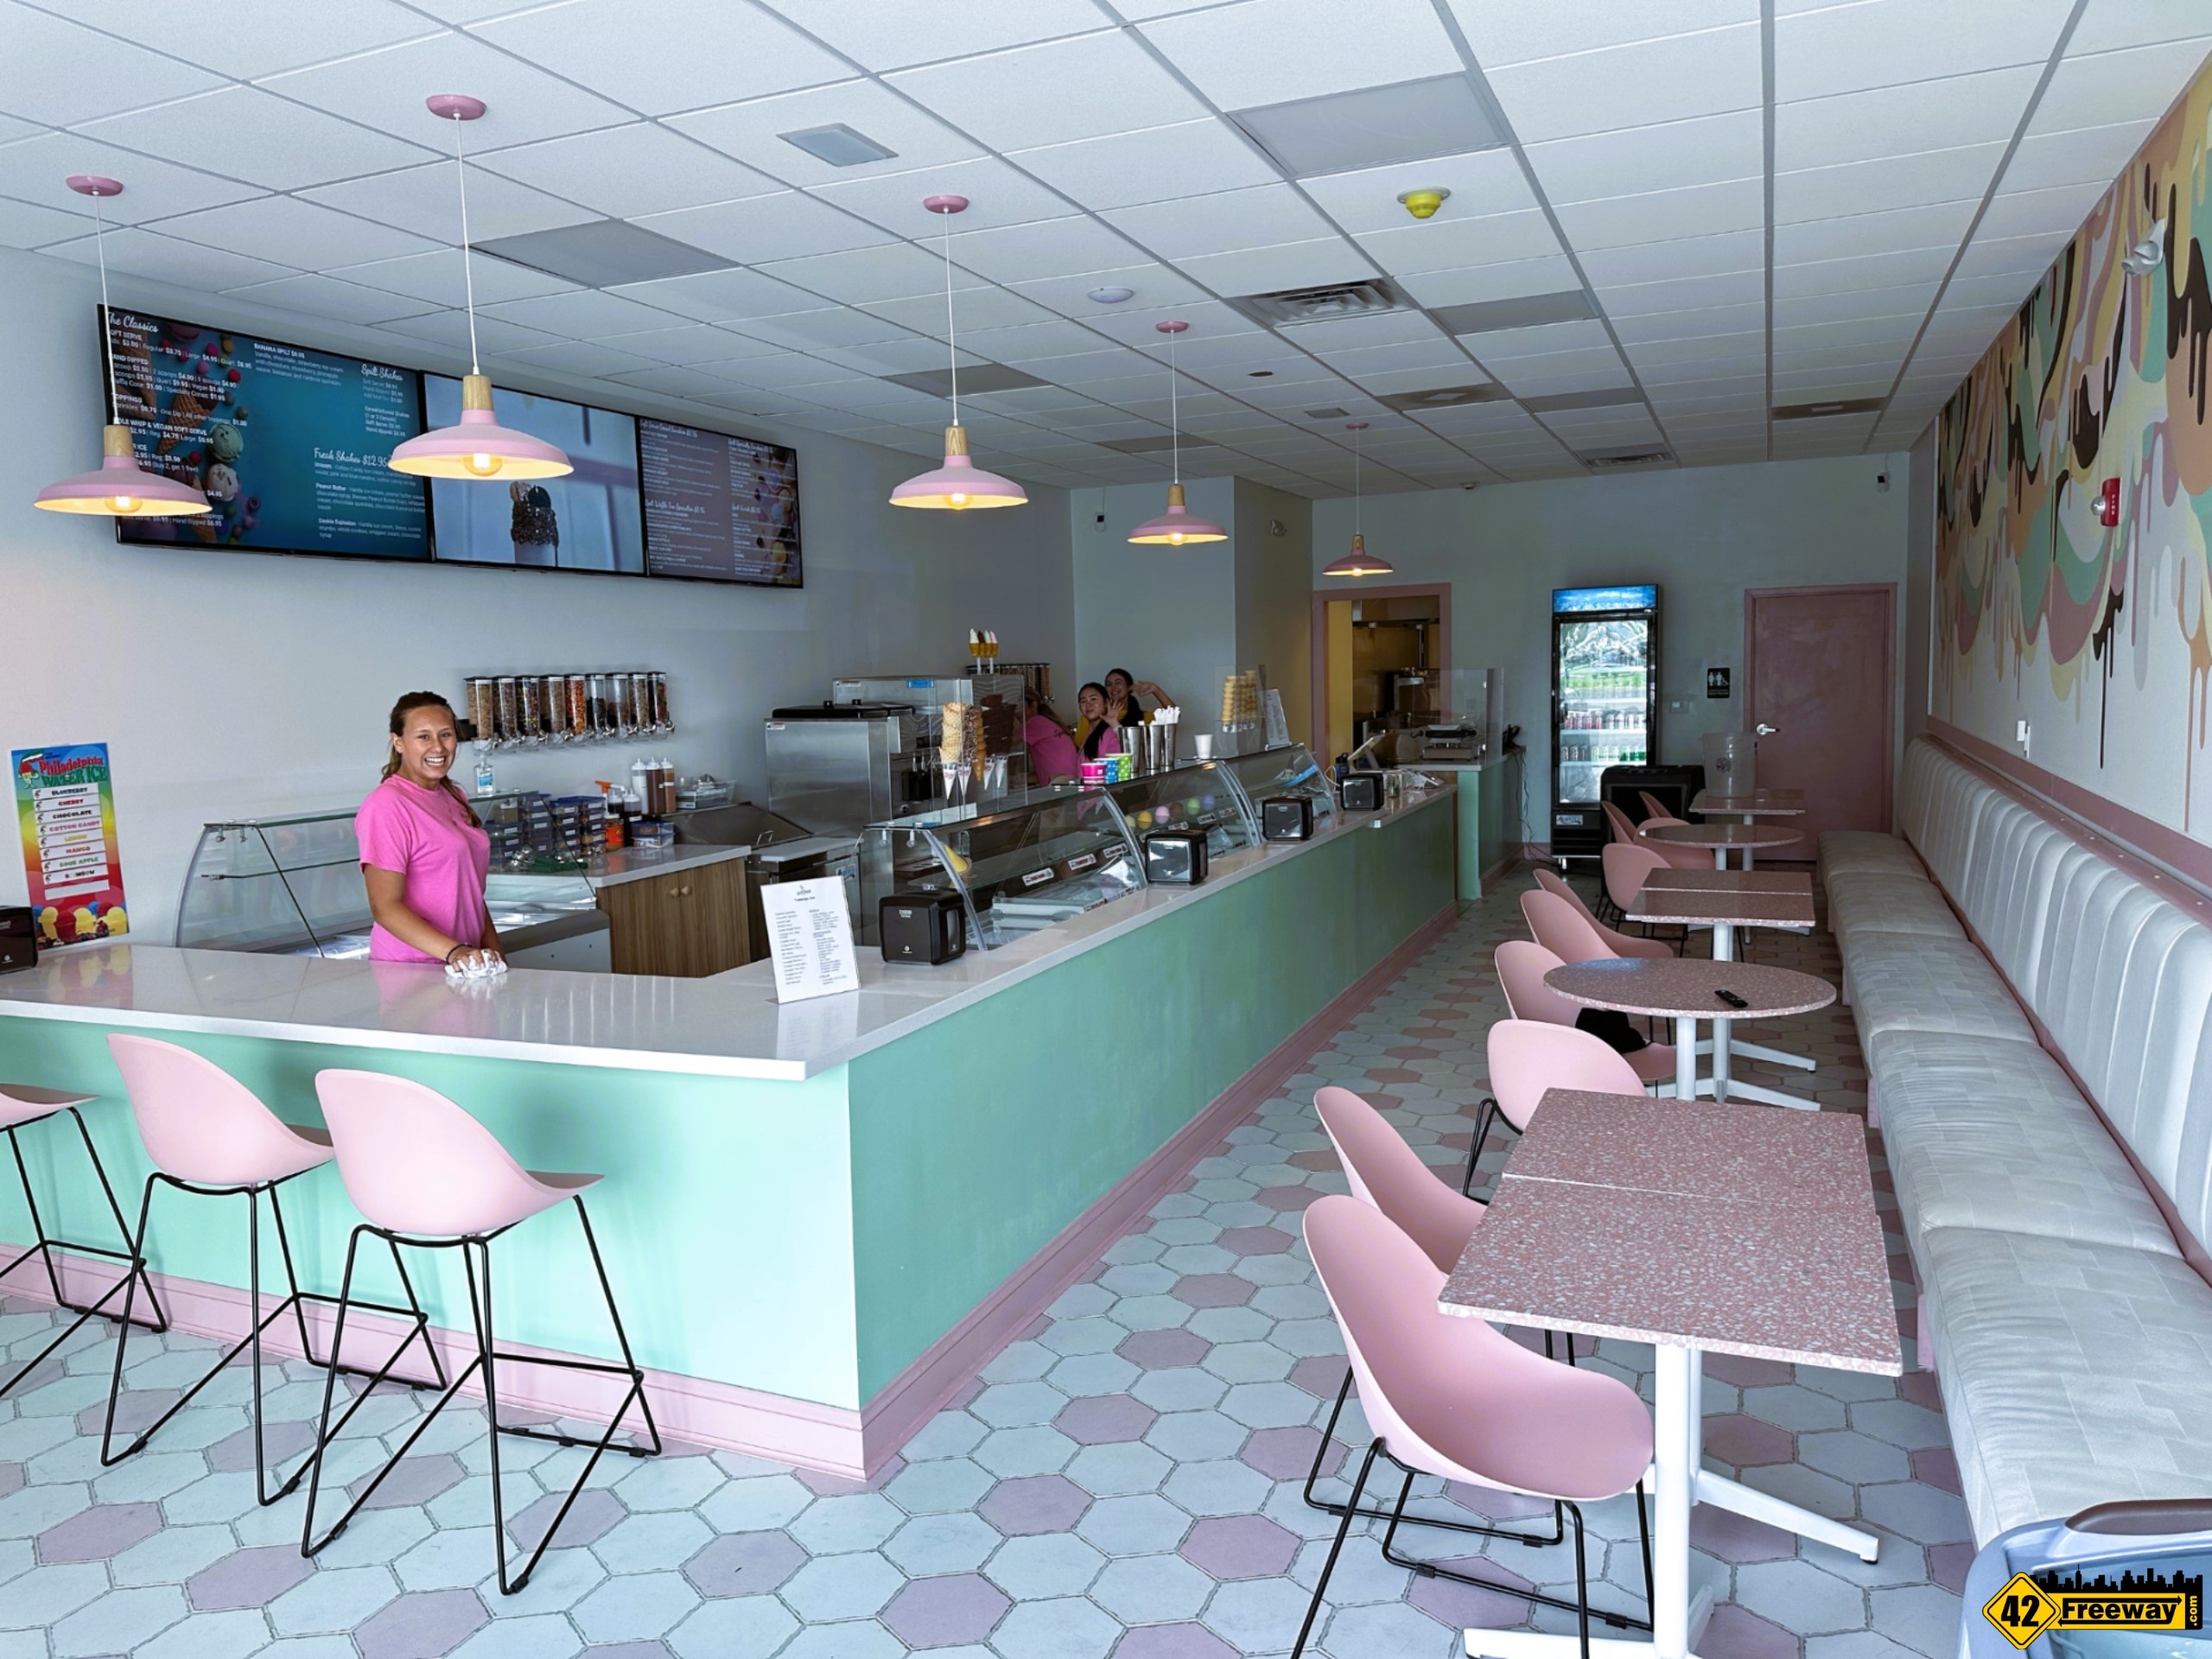 Spilt Milk Washington Twp Offers a Retro Ice Cream Shop Experience With A  Creative Menu - 42 Freeway